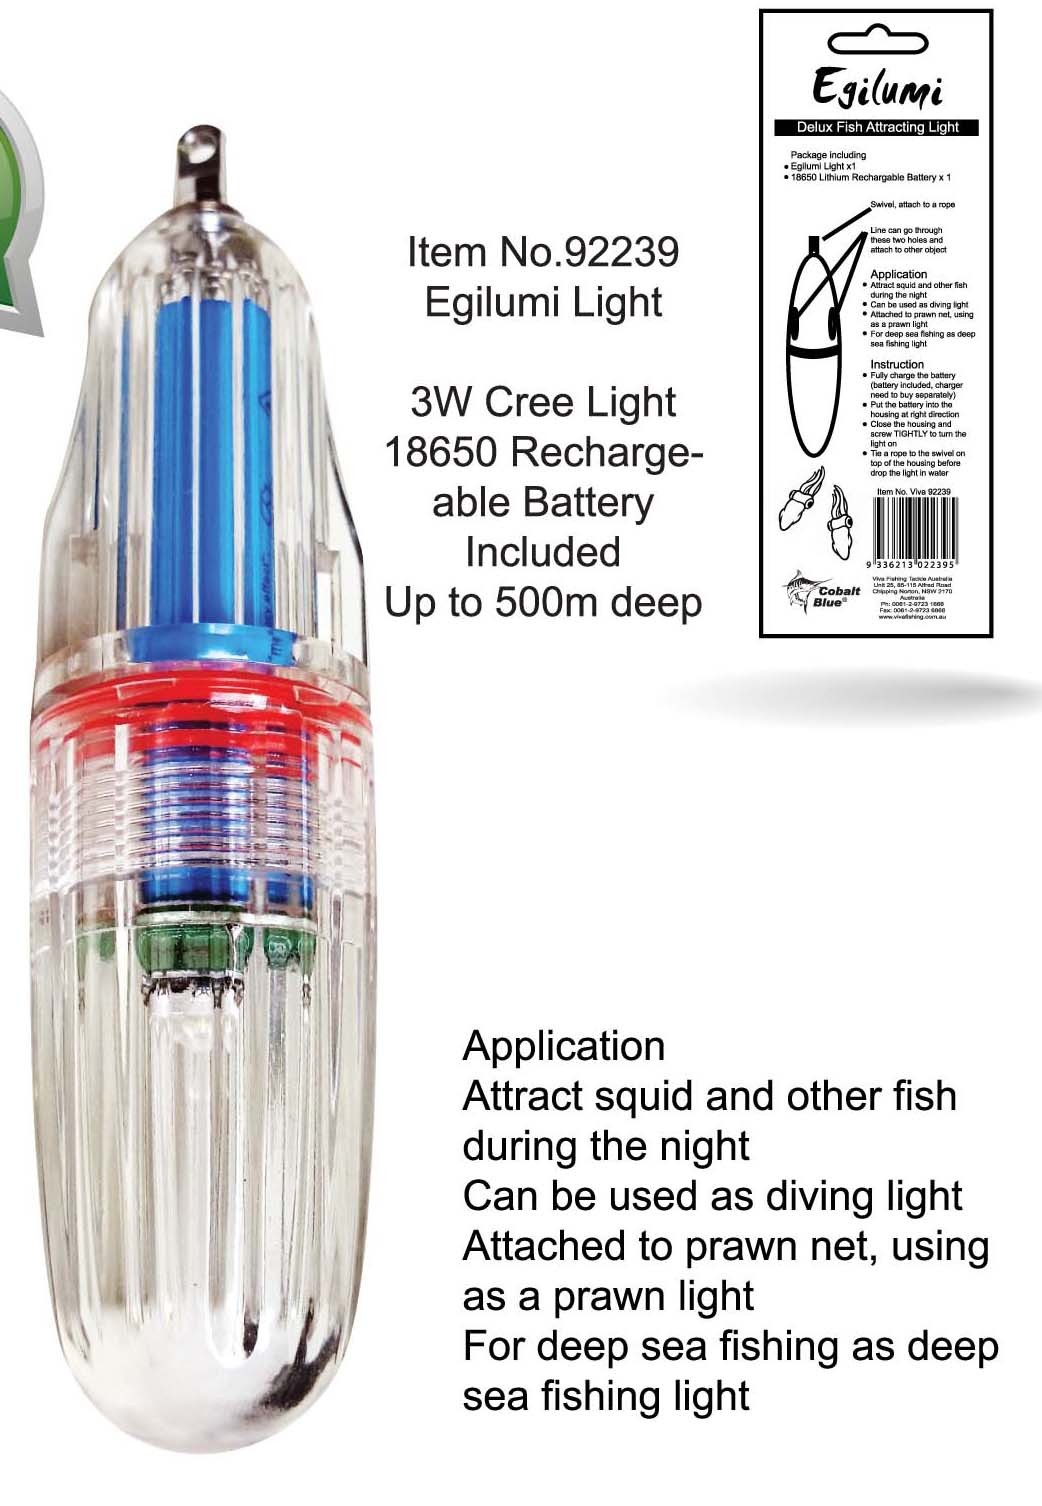 Egilumi Light W/18650 rechargeable battery - 92239 - Viva Fishing